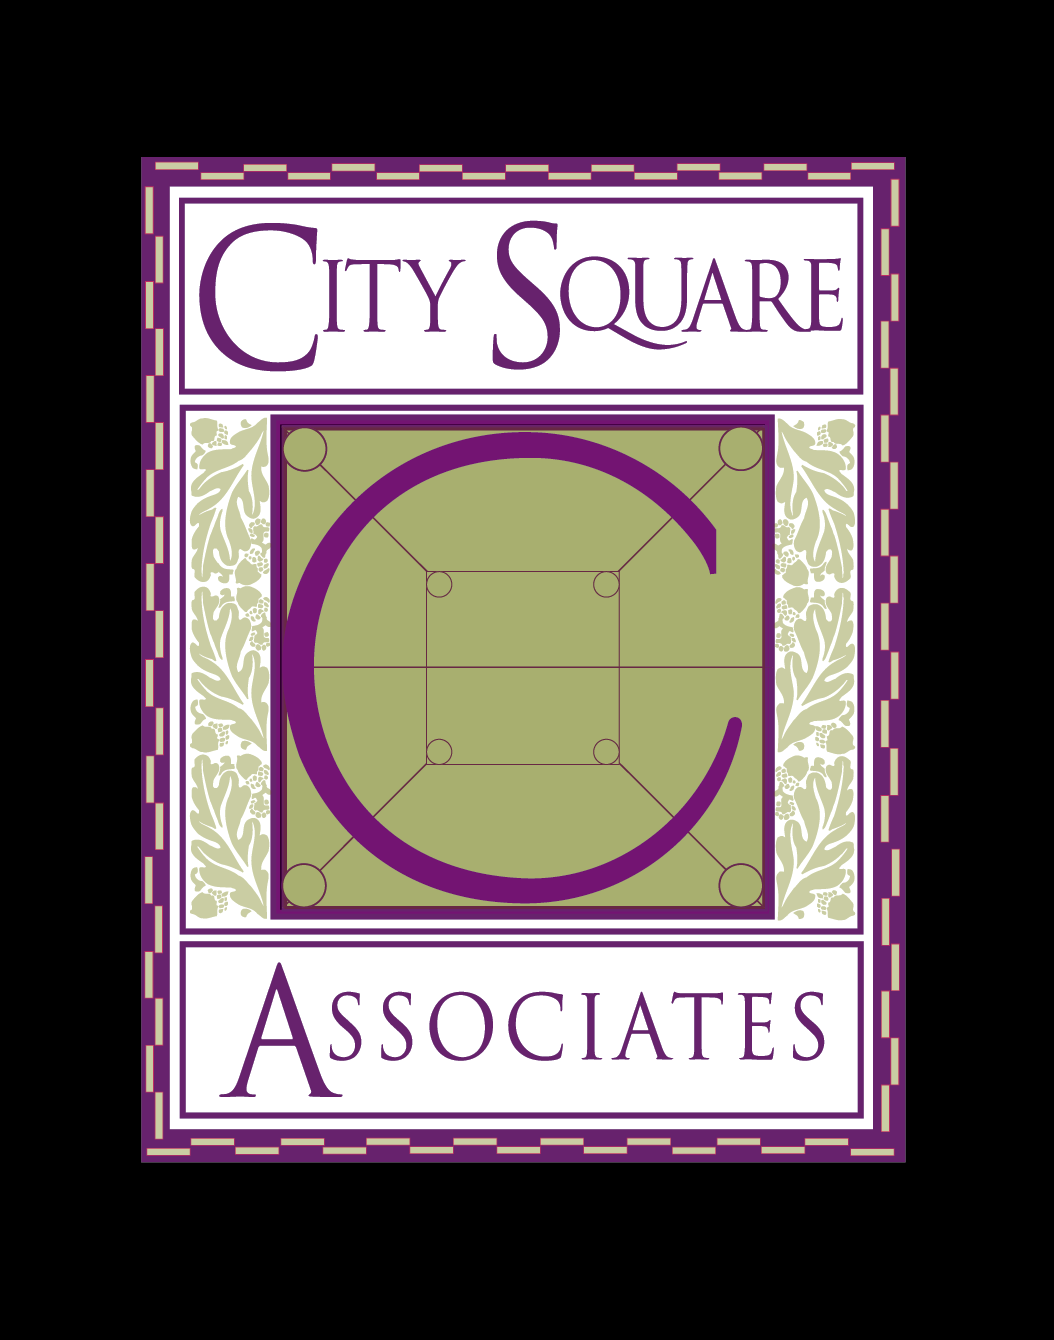 City Square Associates Graphic Art Image